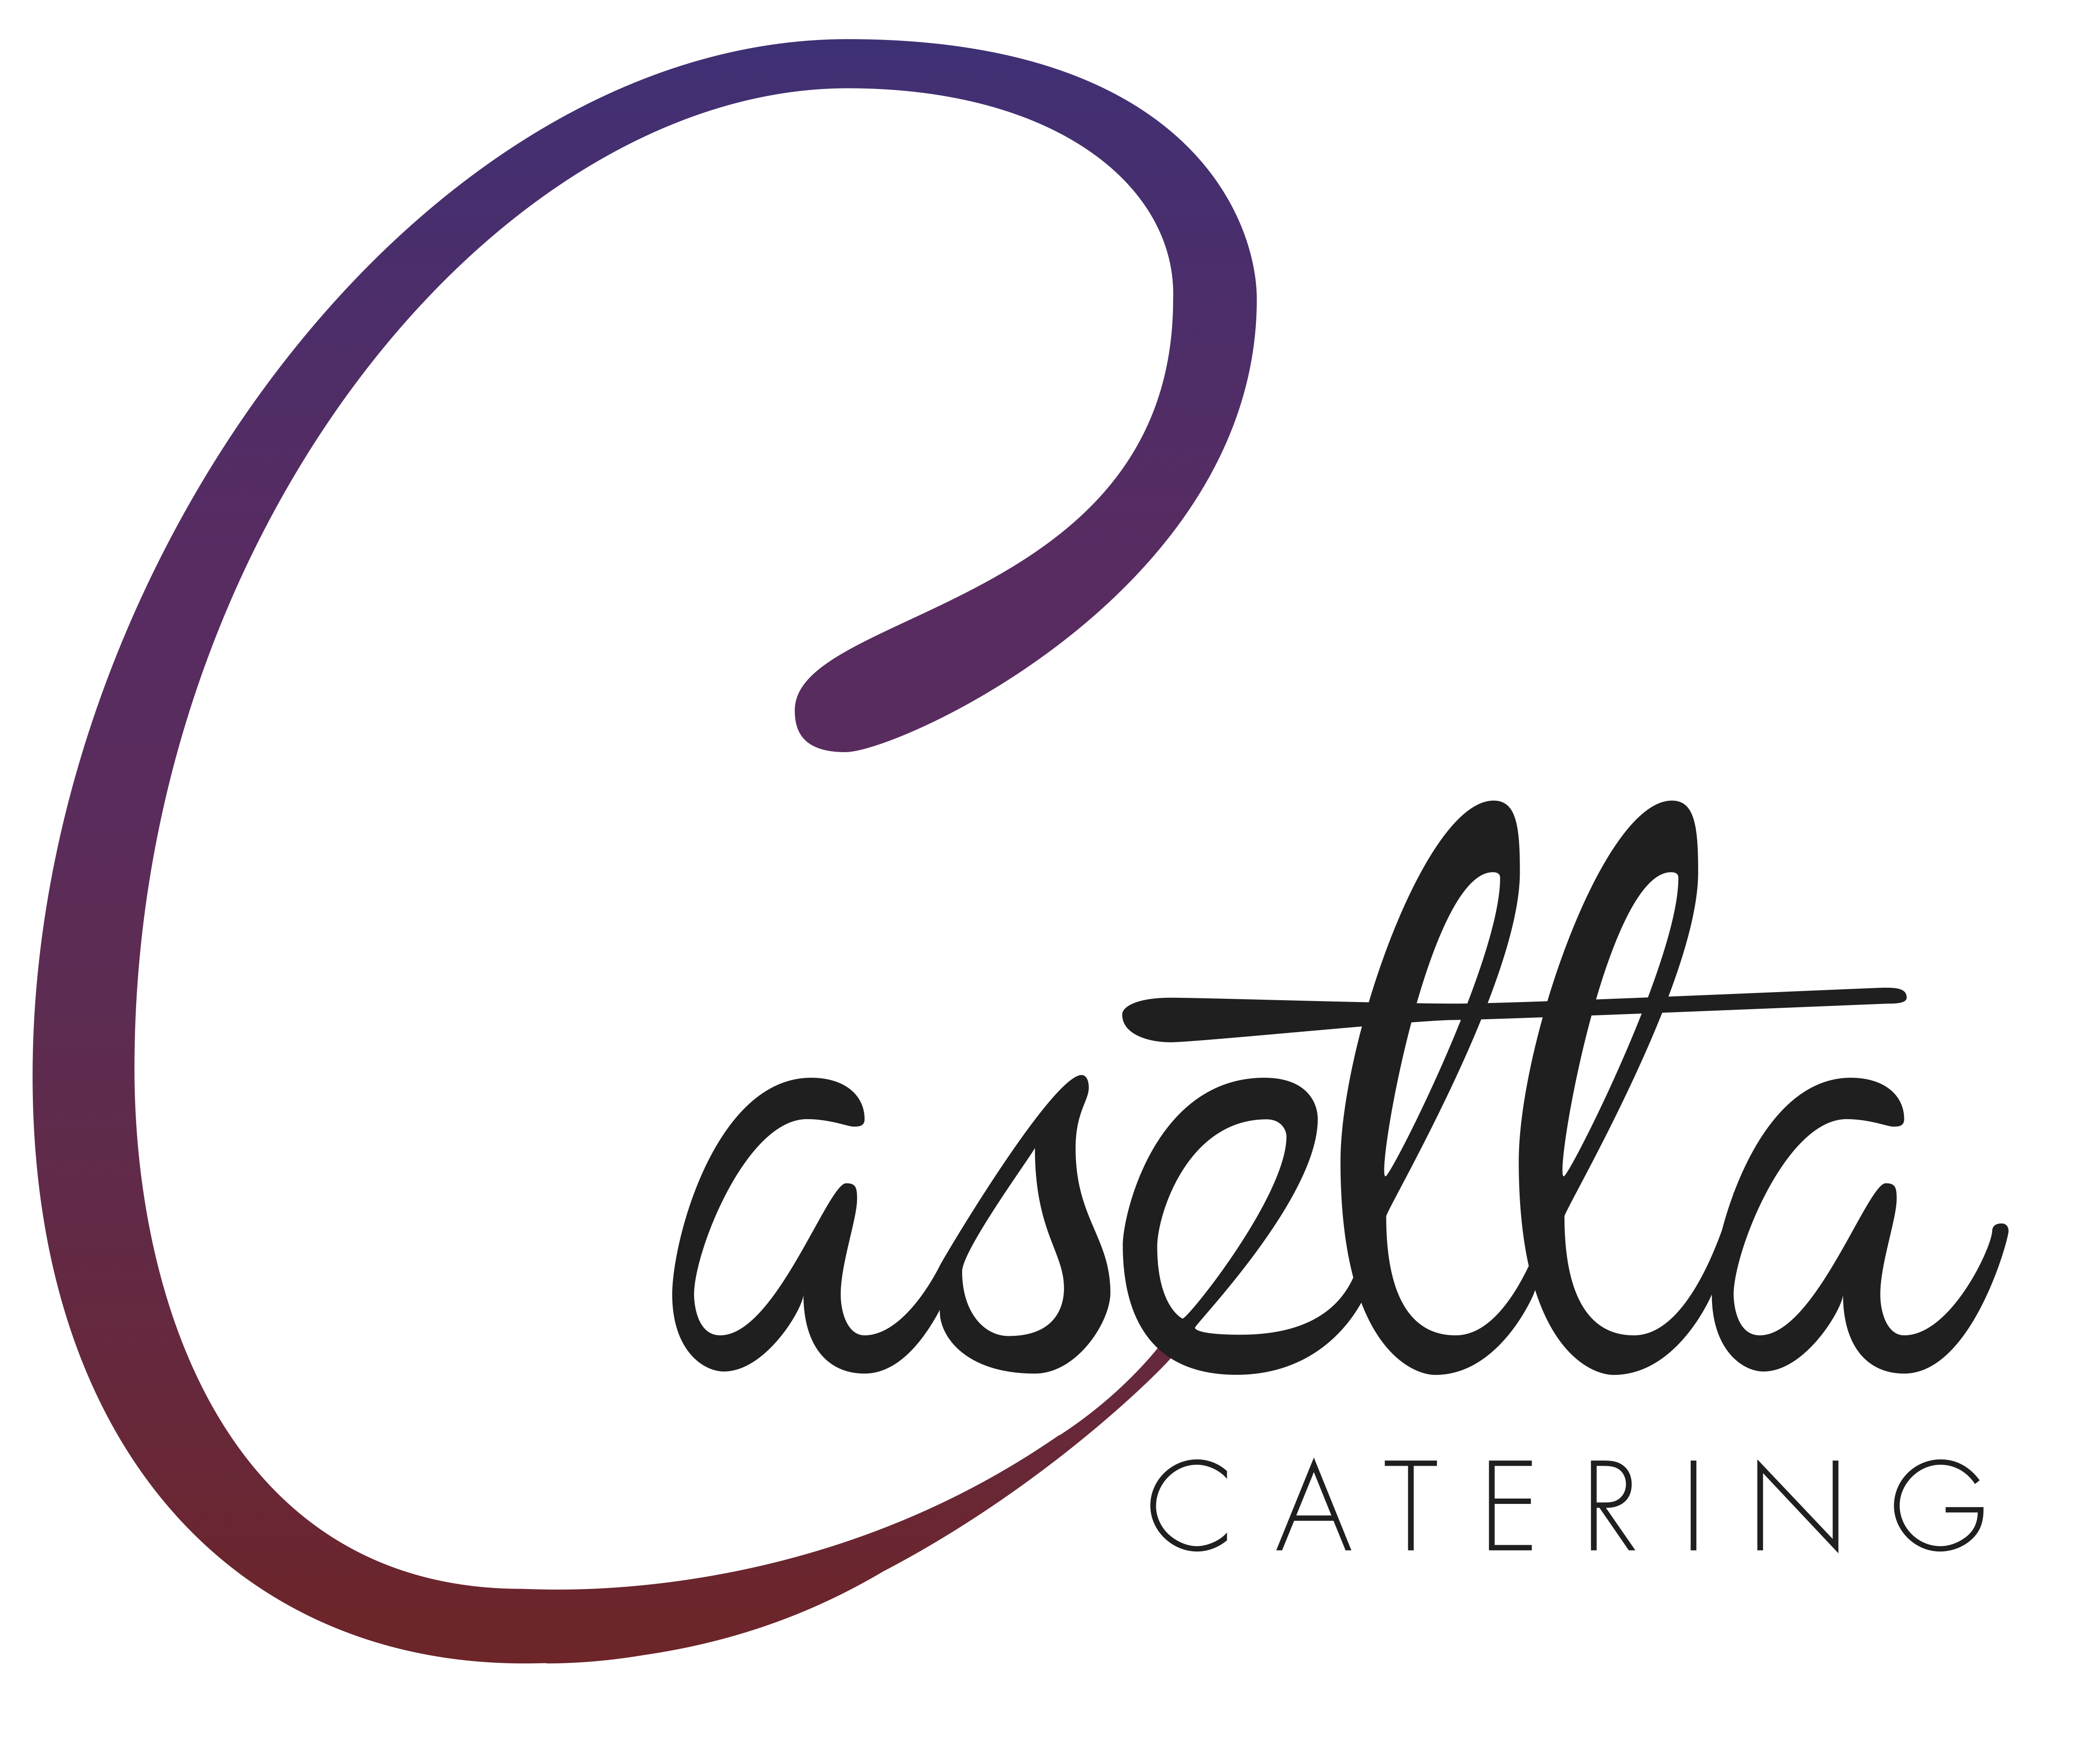 Company Logo For Casetta Catering'